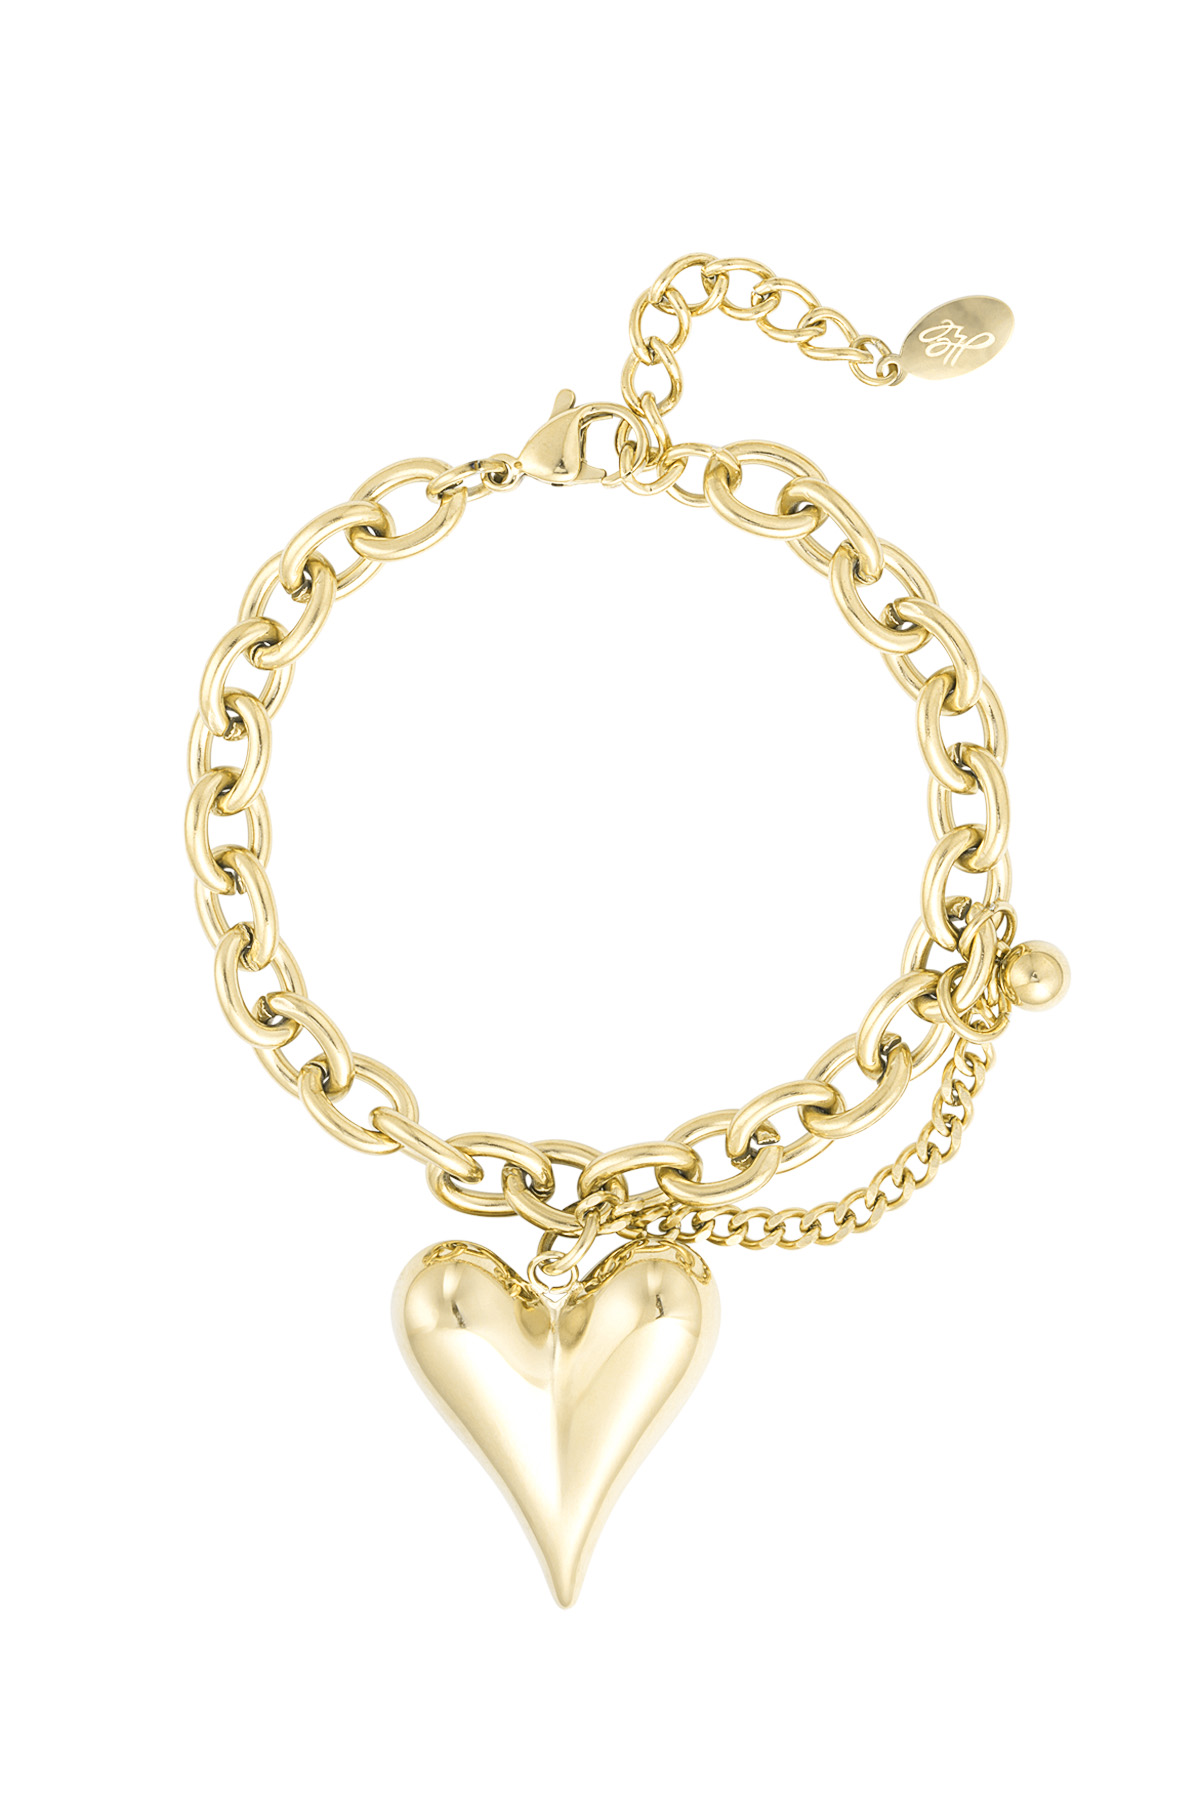 Bracelet love life - gold h5 